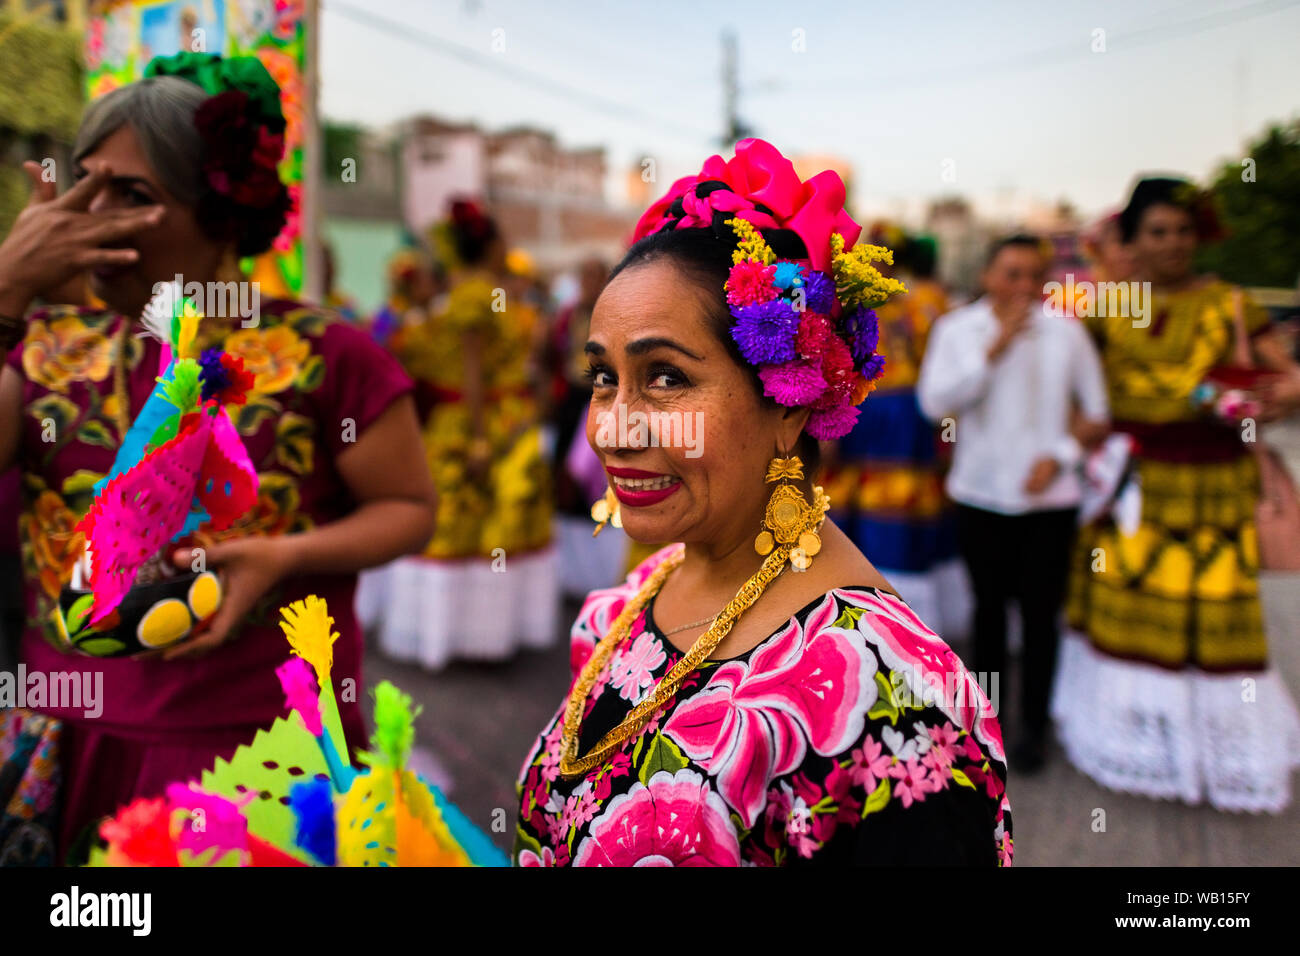 A Mexican woman of Zapotec origin, wearing traditional Tehuana dress, takes part in the festival in Juchitán de Zaragoza, Mexico. Stock Photo